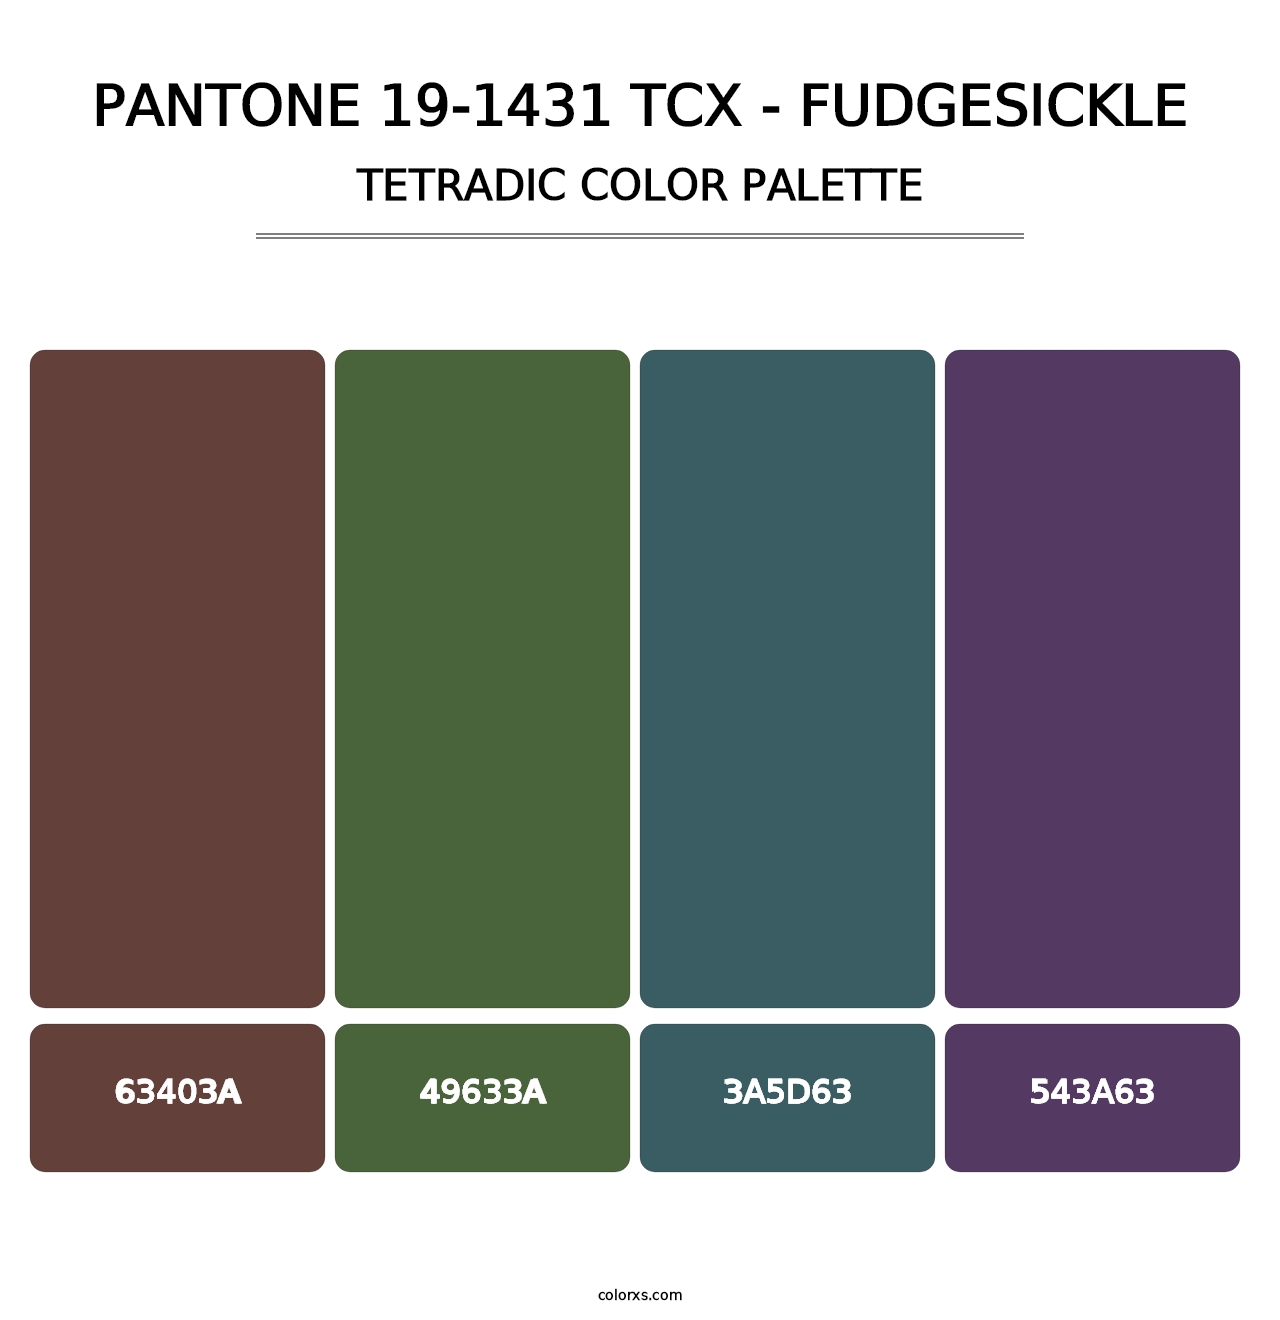 PANTONE 19-1431 TCX - Fudgesickle - Tetradic Color Palette